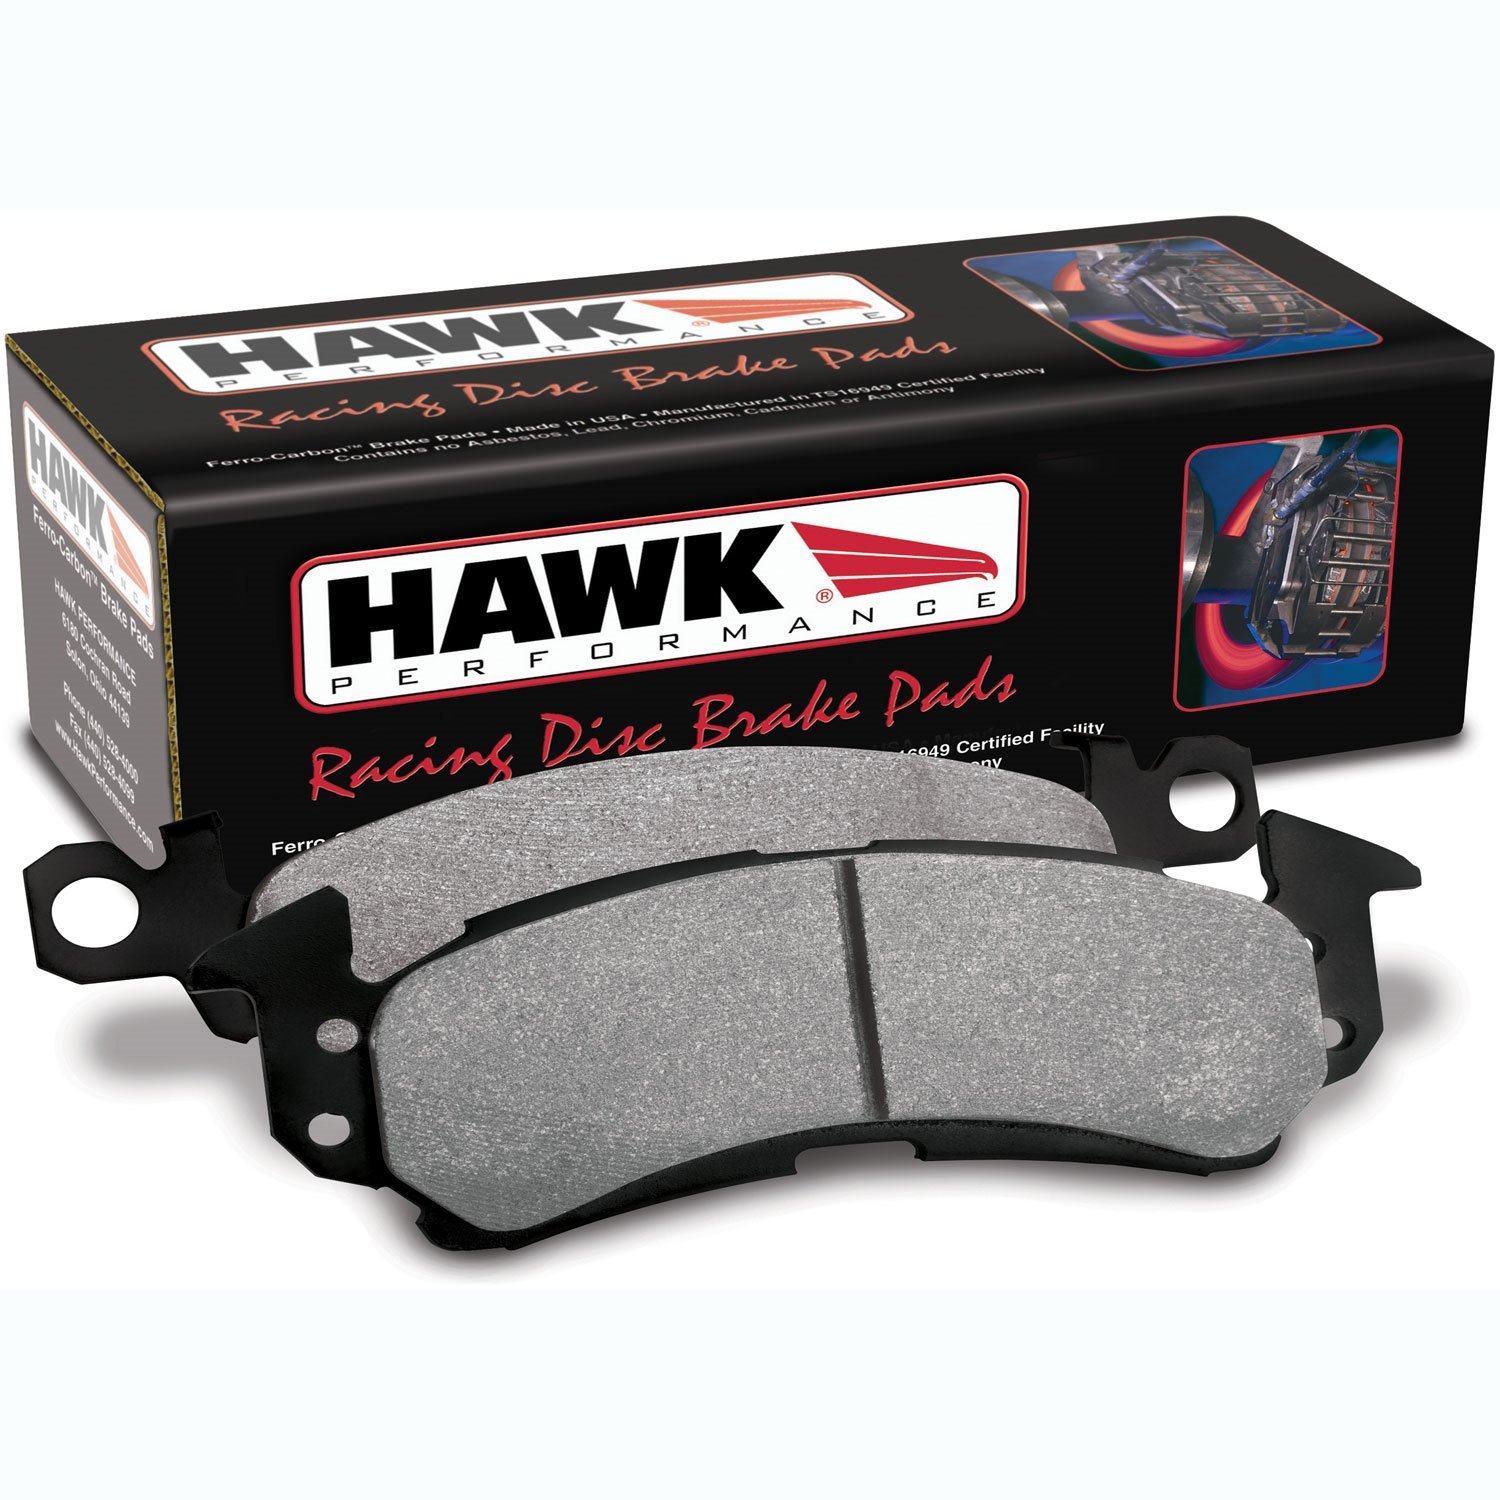 Disc Brake Pad HP Plus w/0.748 Thickness